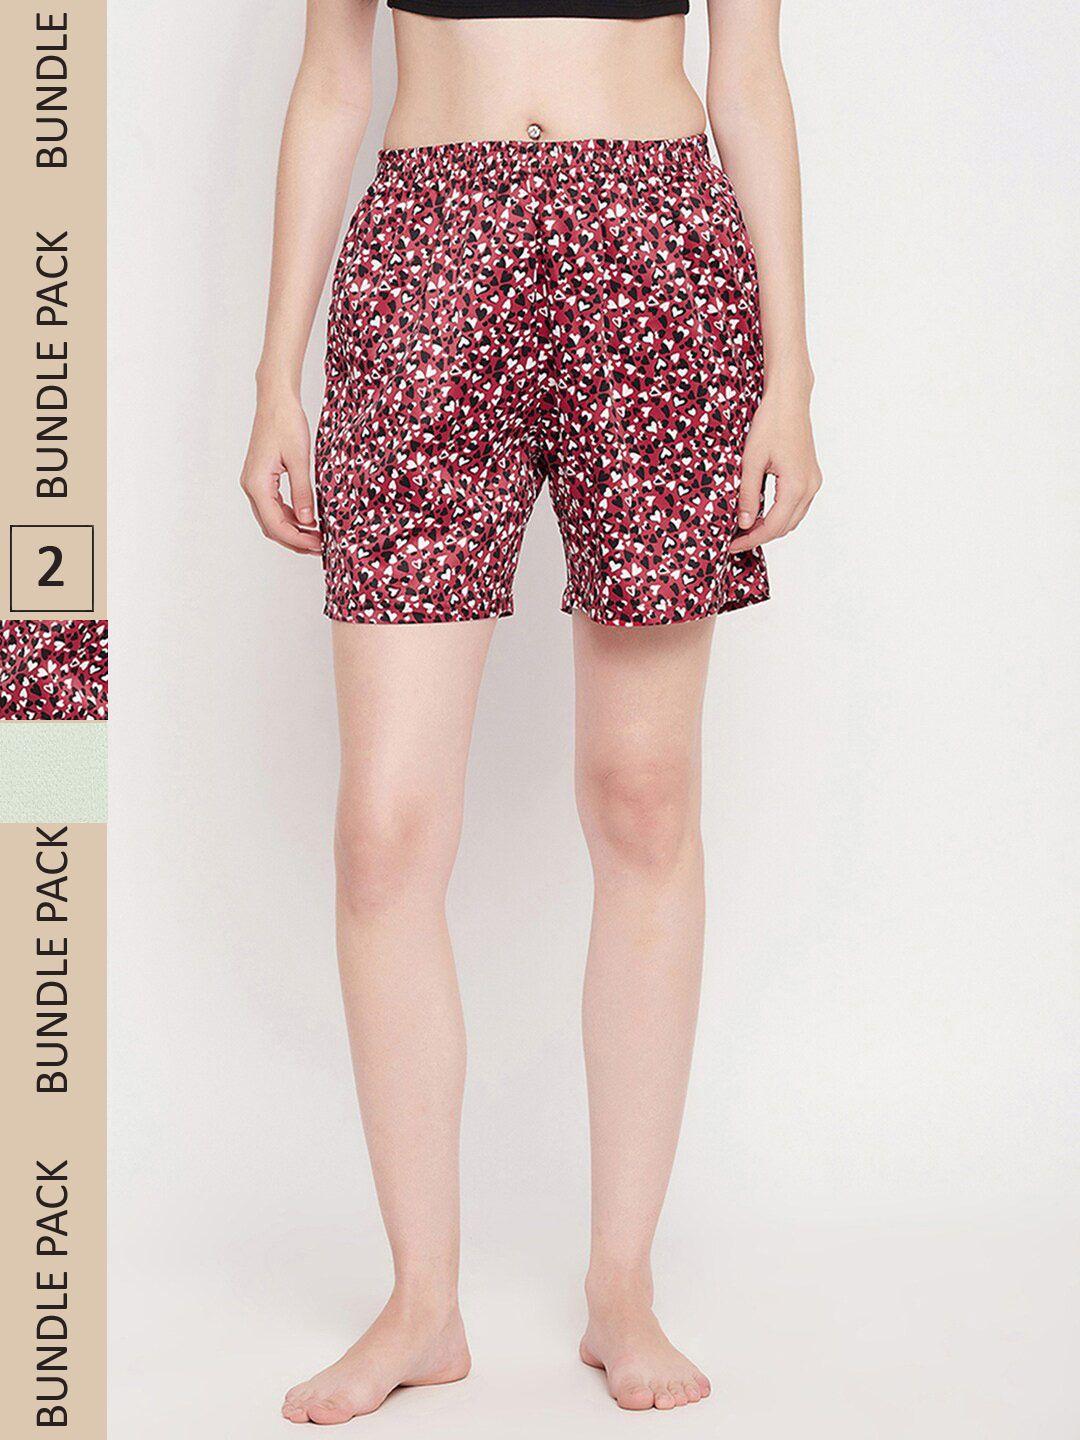 clovia--women-pack-of-2-mid-rise-printed-lounge-shorts